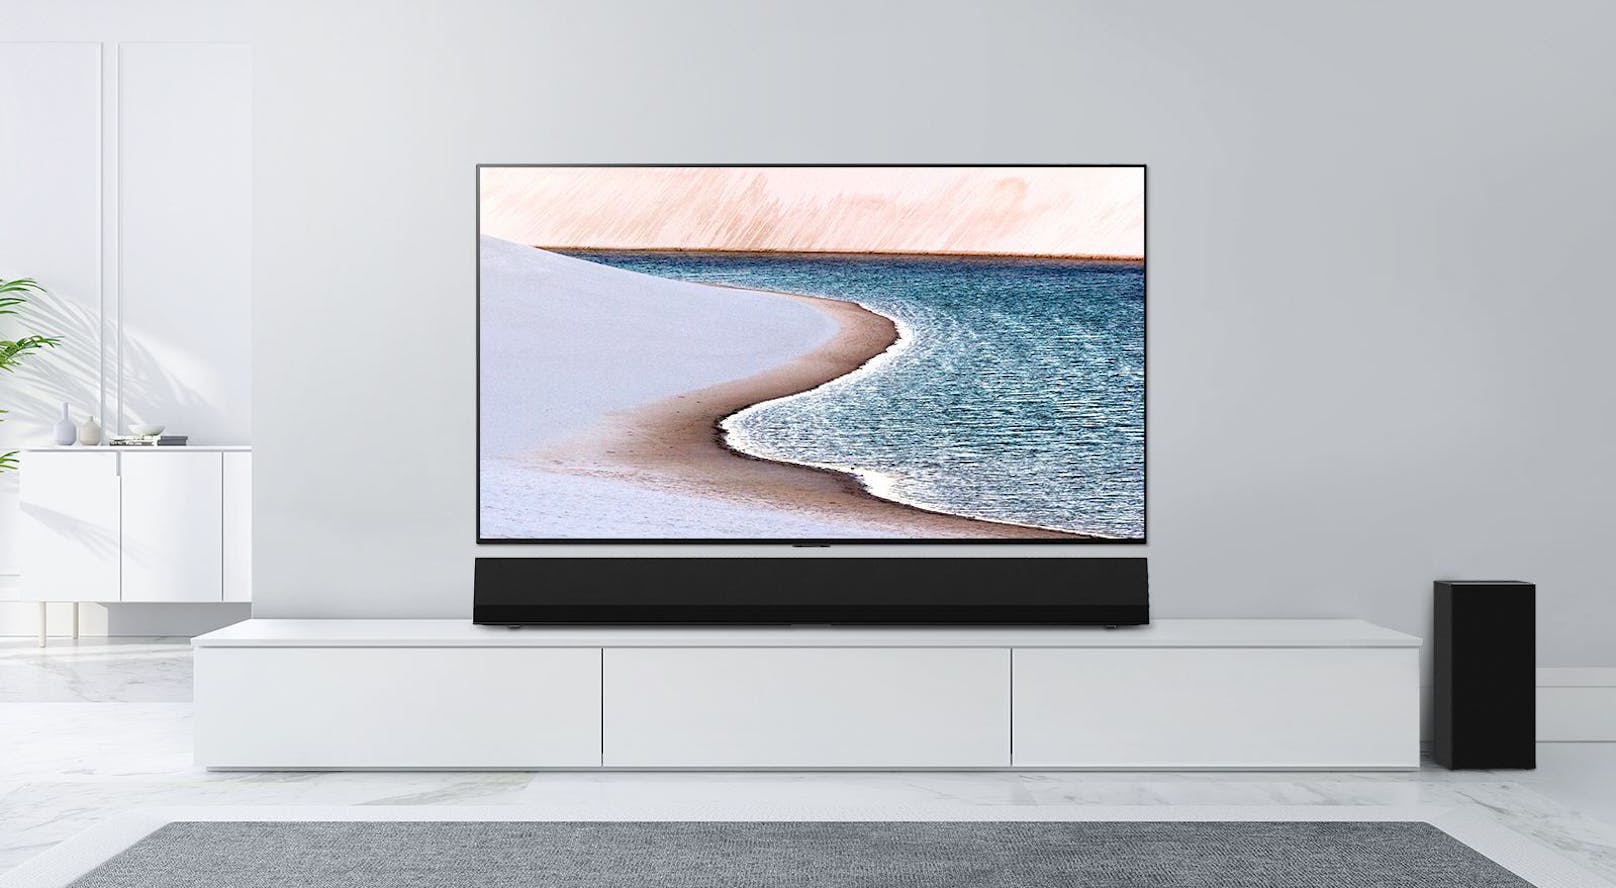 Ideale Audio-Begleitung für LGs GX OLED-TVs: Neue GX Soundbar von LG bietet erstklassigen Klang.